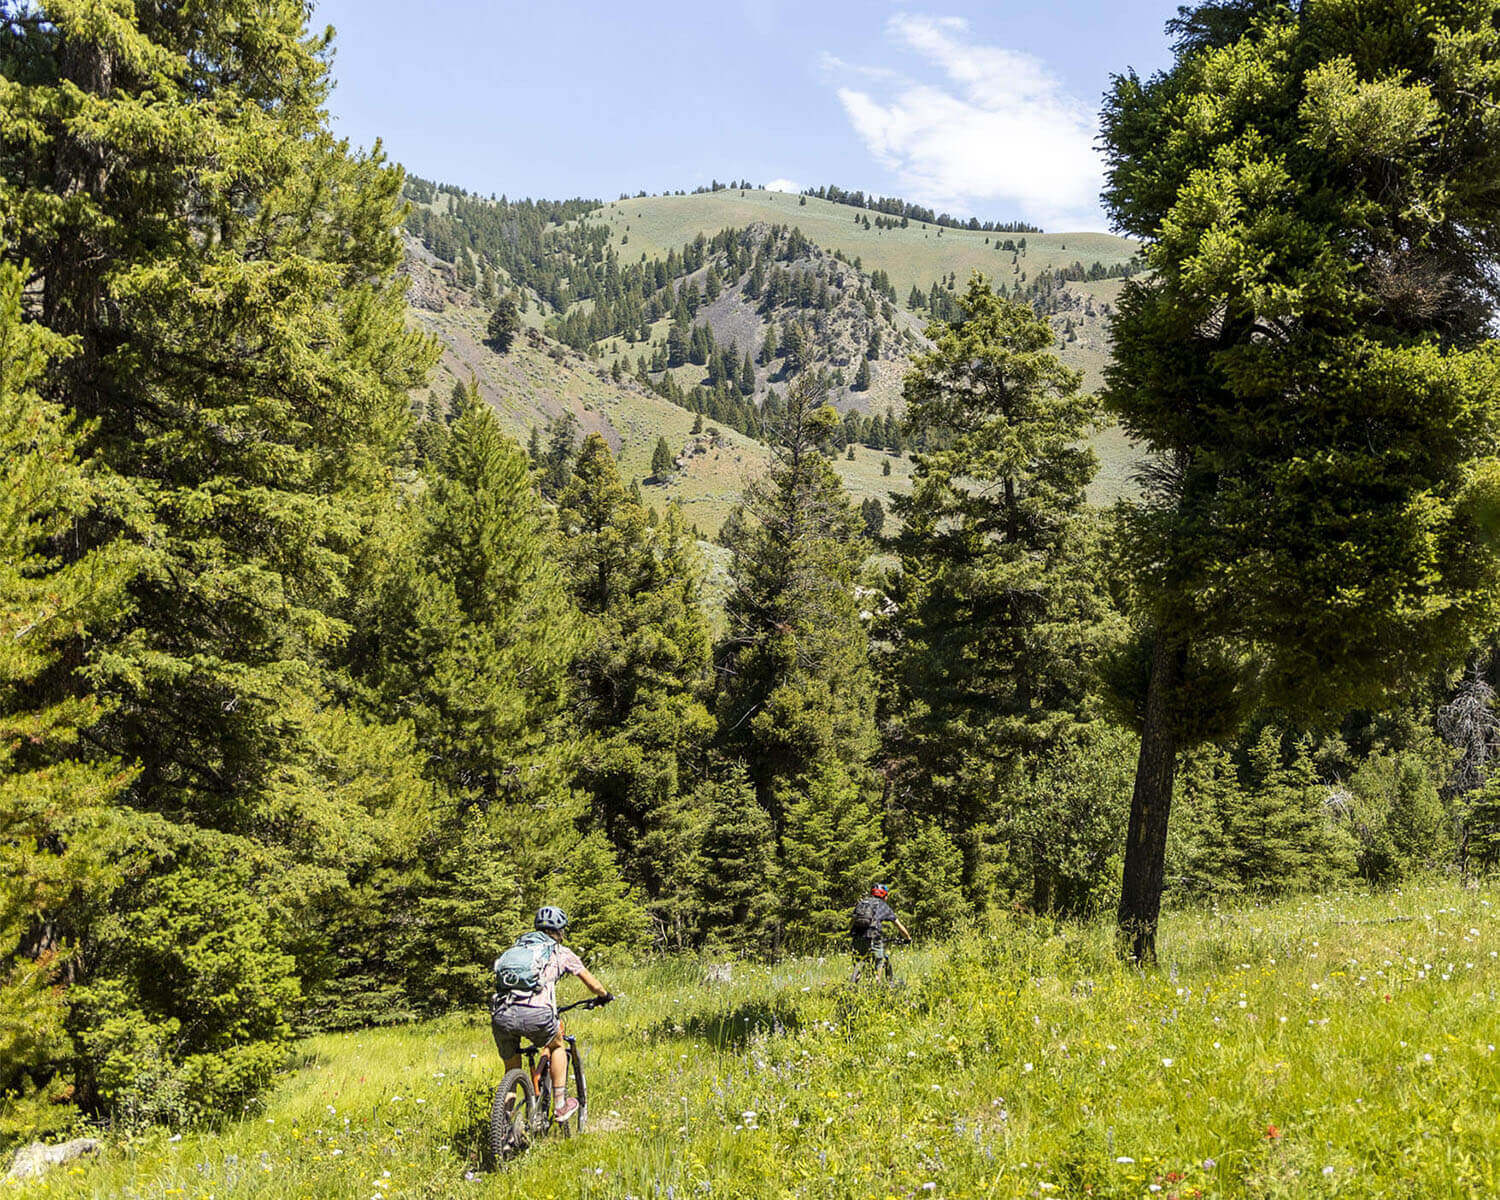 Two people riding mountain bikes on the Powderhouse Gulch Trail.